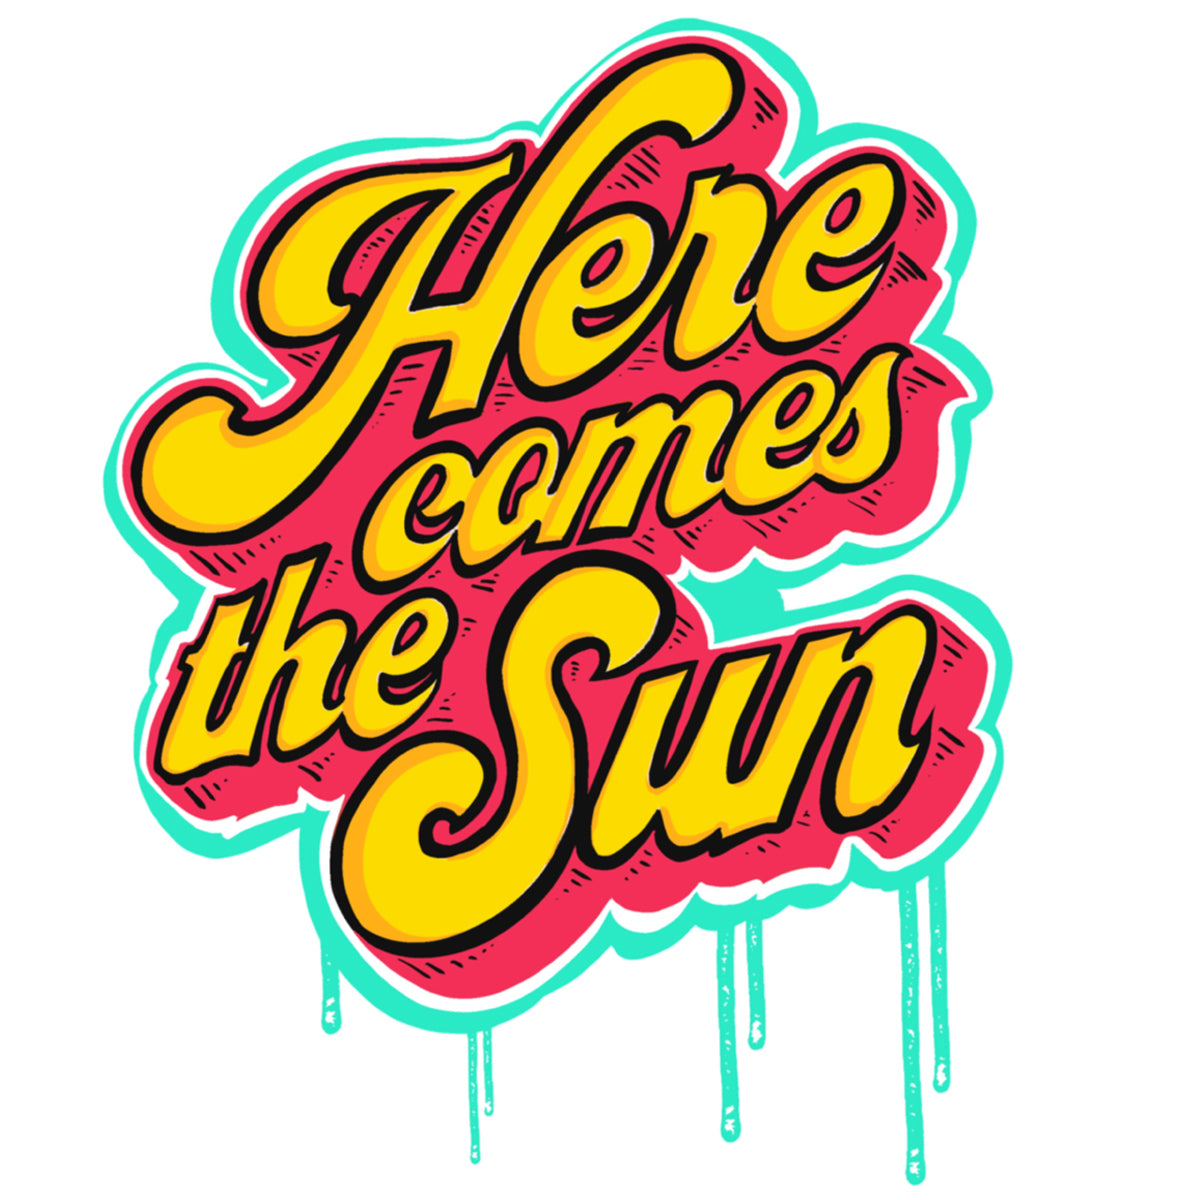 June 29 + 30: Here Comes The Sun